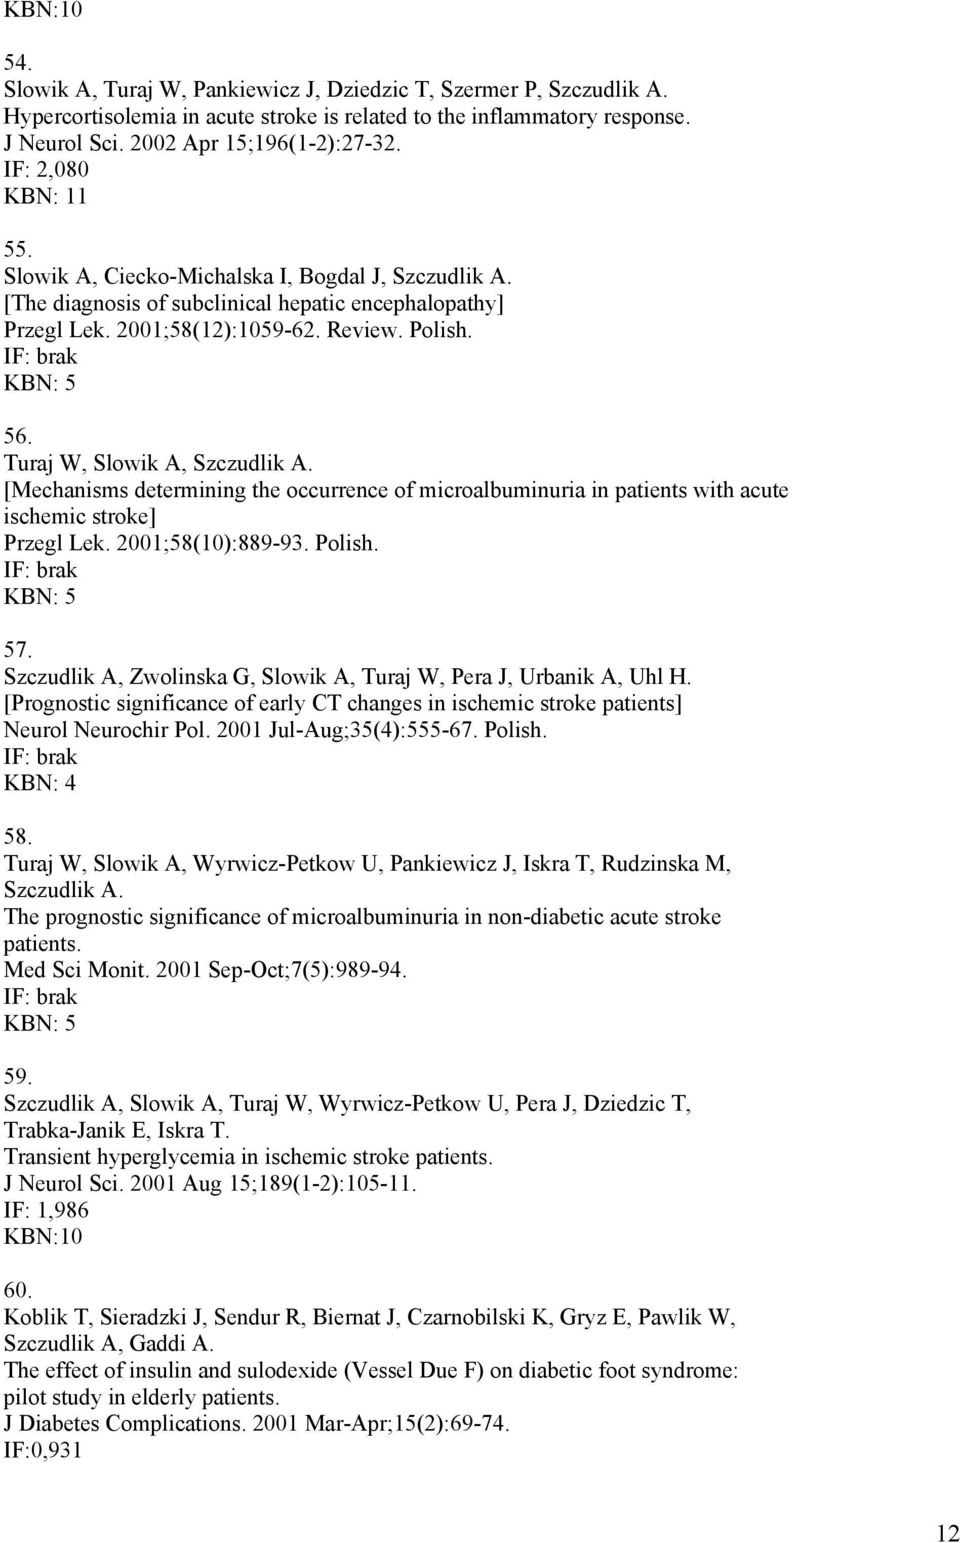 Turaj W, Slowik A, Szczudlik A. [Mechanisms determining the occurrence of microalbuminuria in patients with acute ischemic stroke] Przegl Lek. 2001;58(10):889-93. Polish. 57.